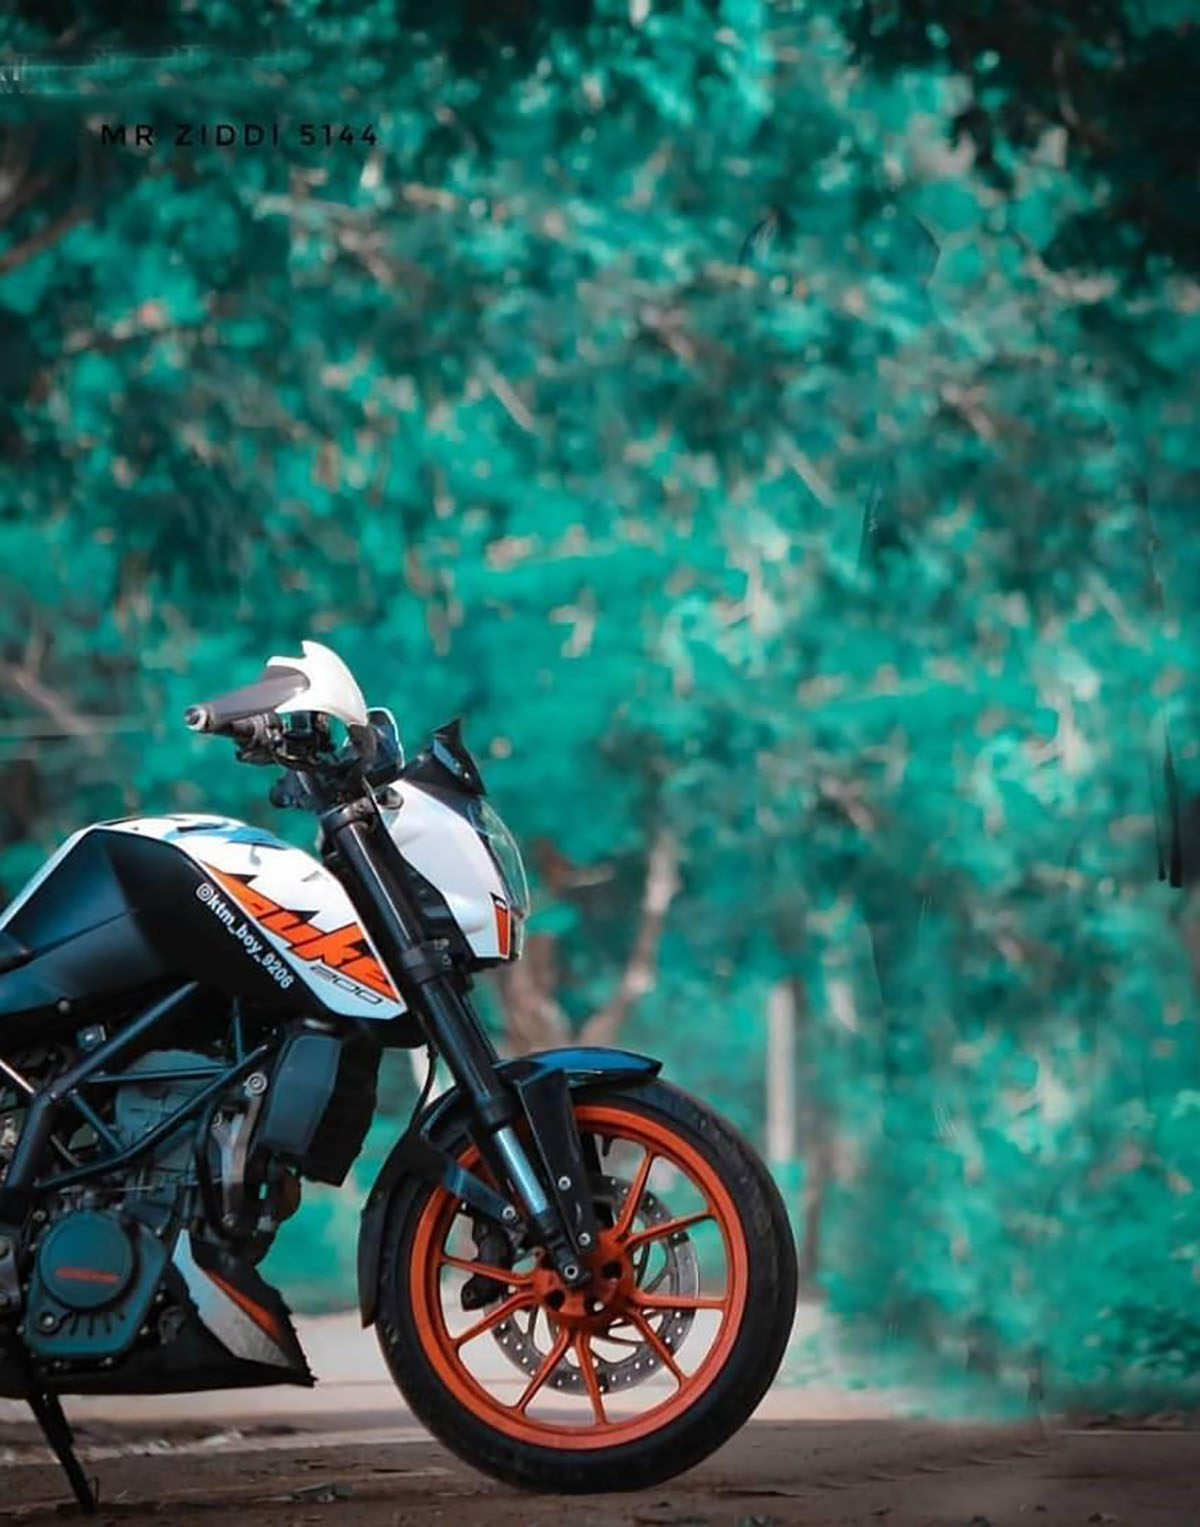  KTM Bike CB Picsart Editing Background Full Hd | CBEditz